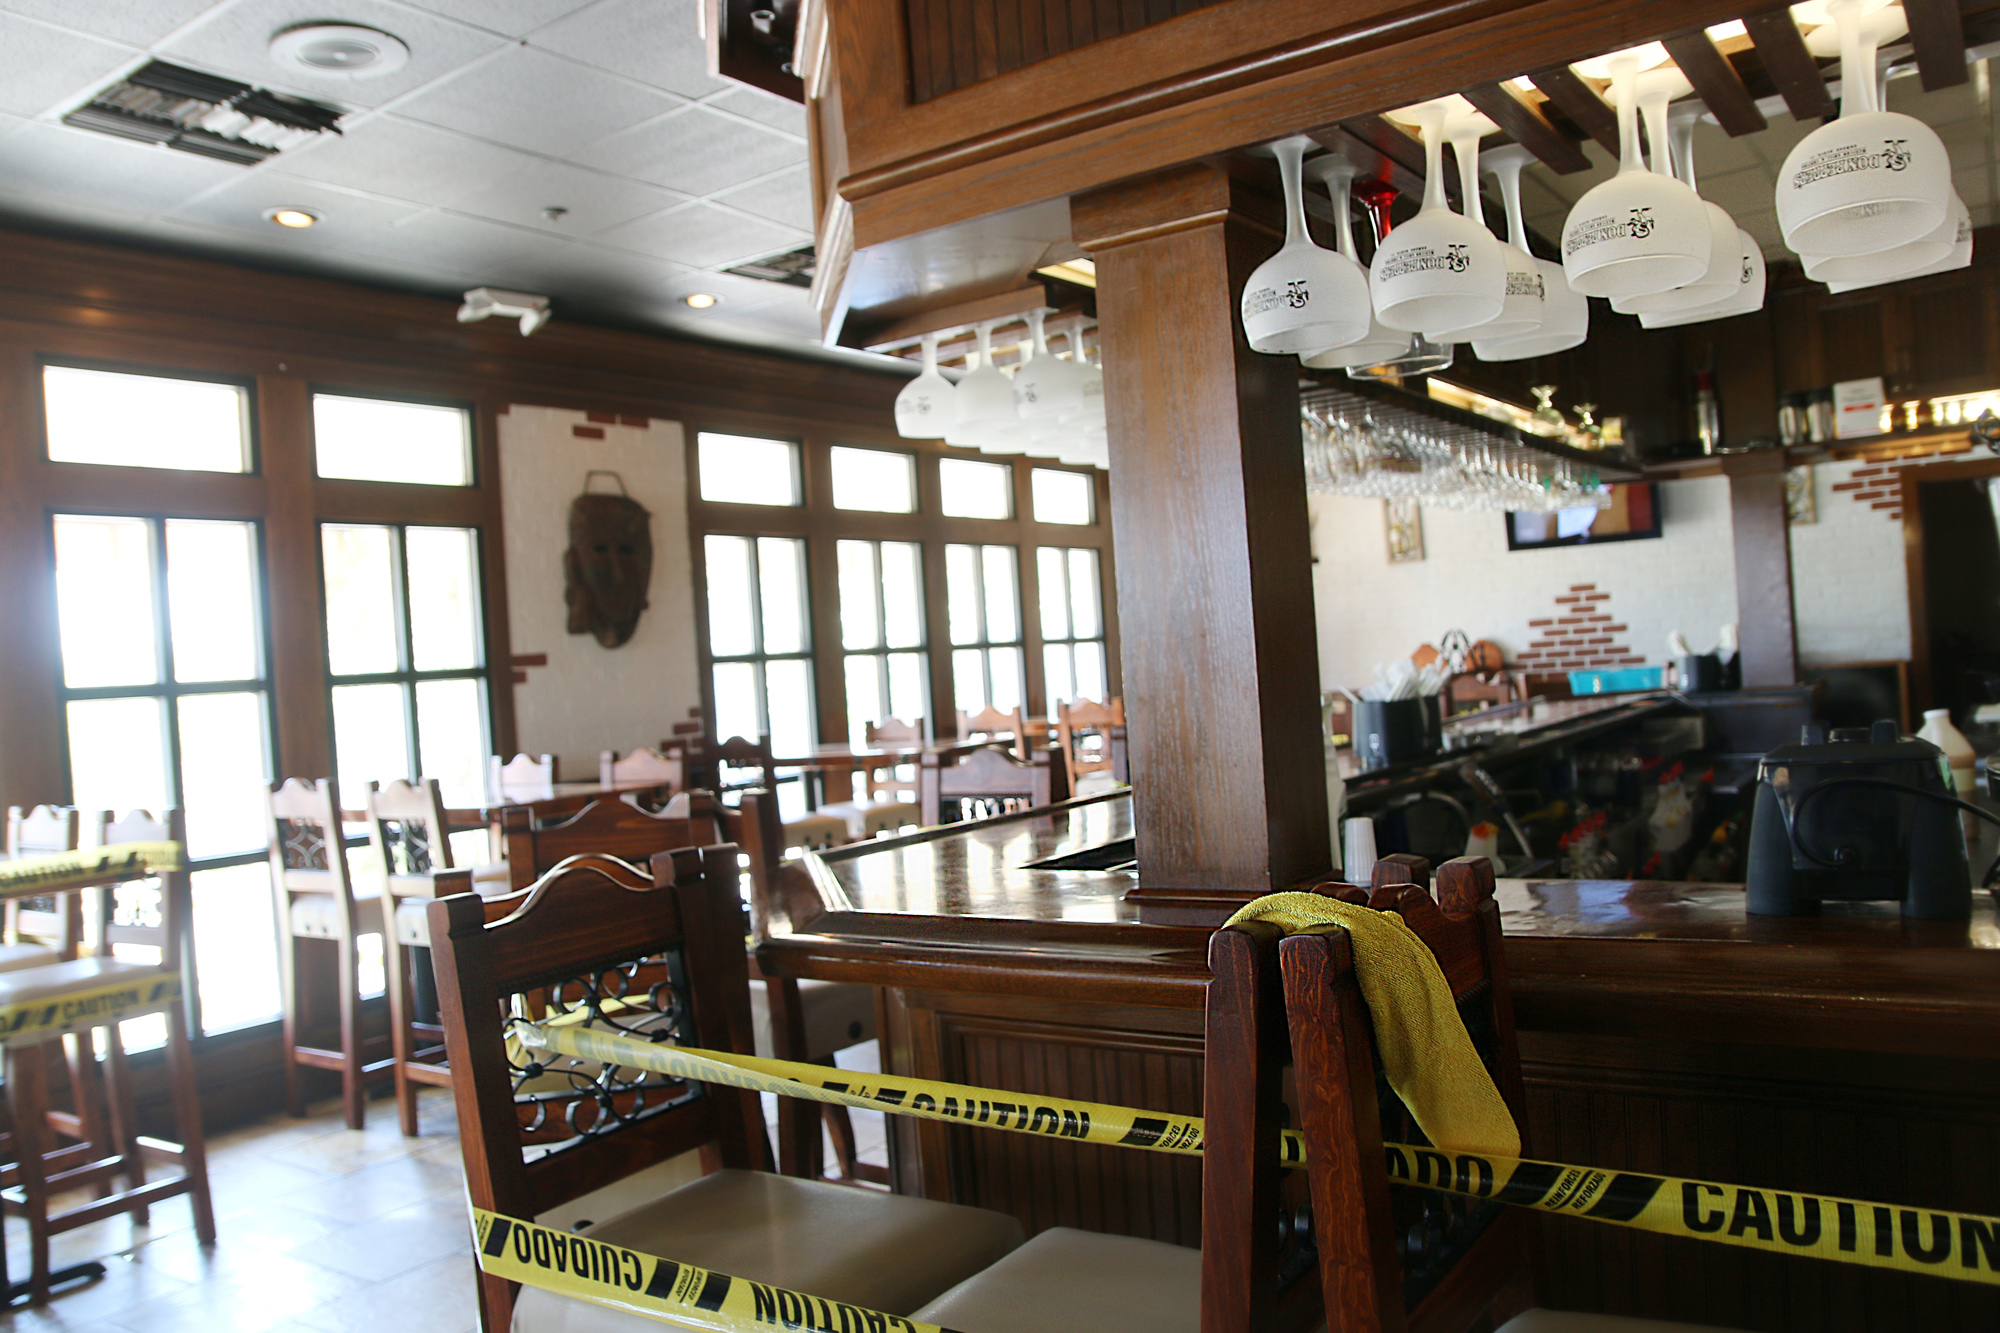 A look inside what Don Pepper's bar area looks like. Photo by Jarleene Almenas